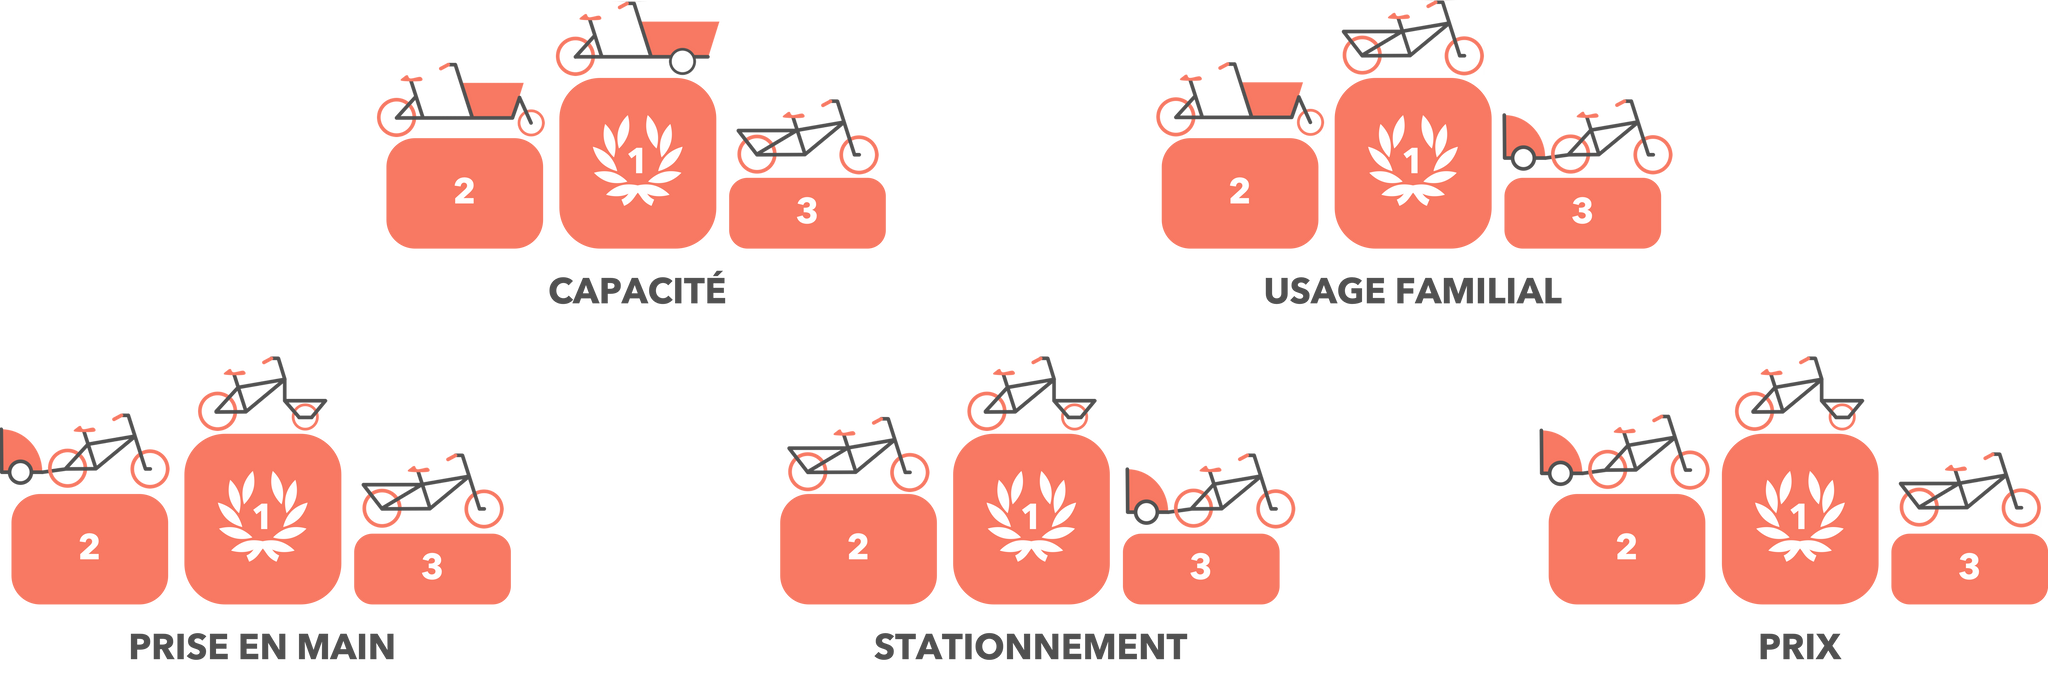 Cargo Bike - Comparison of Usage Characteristics